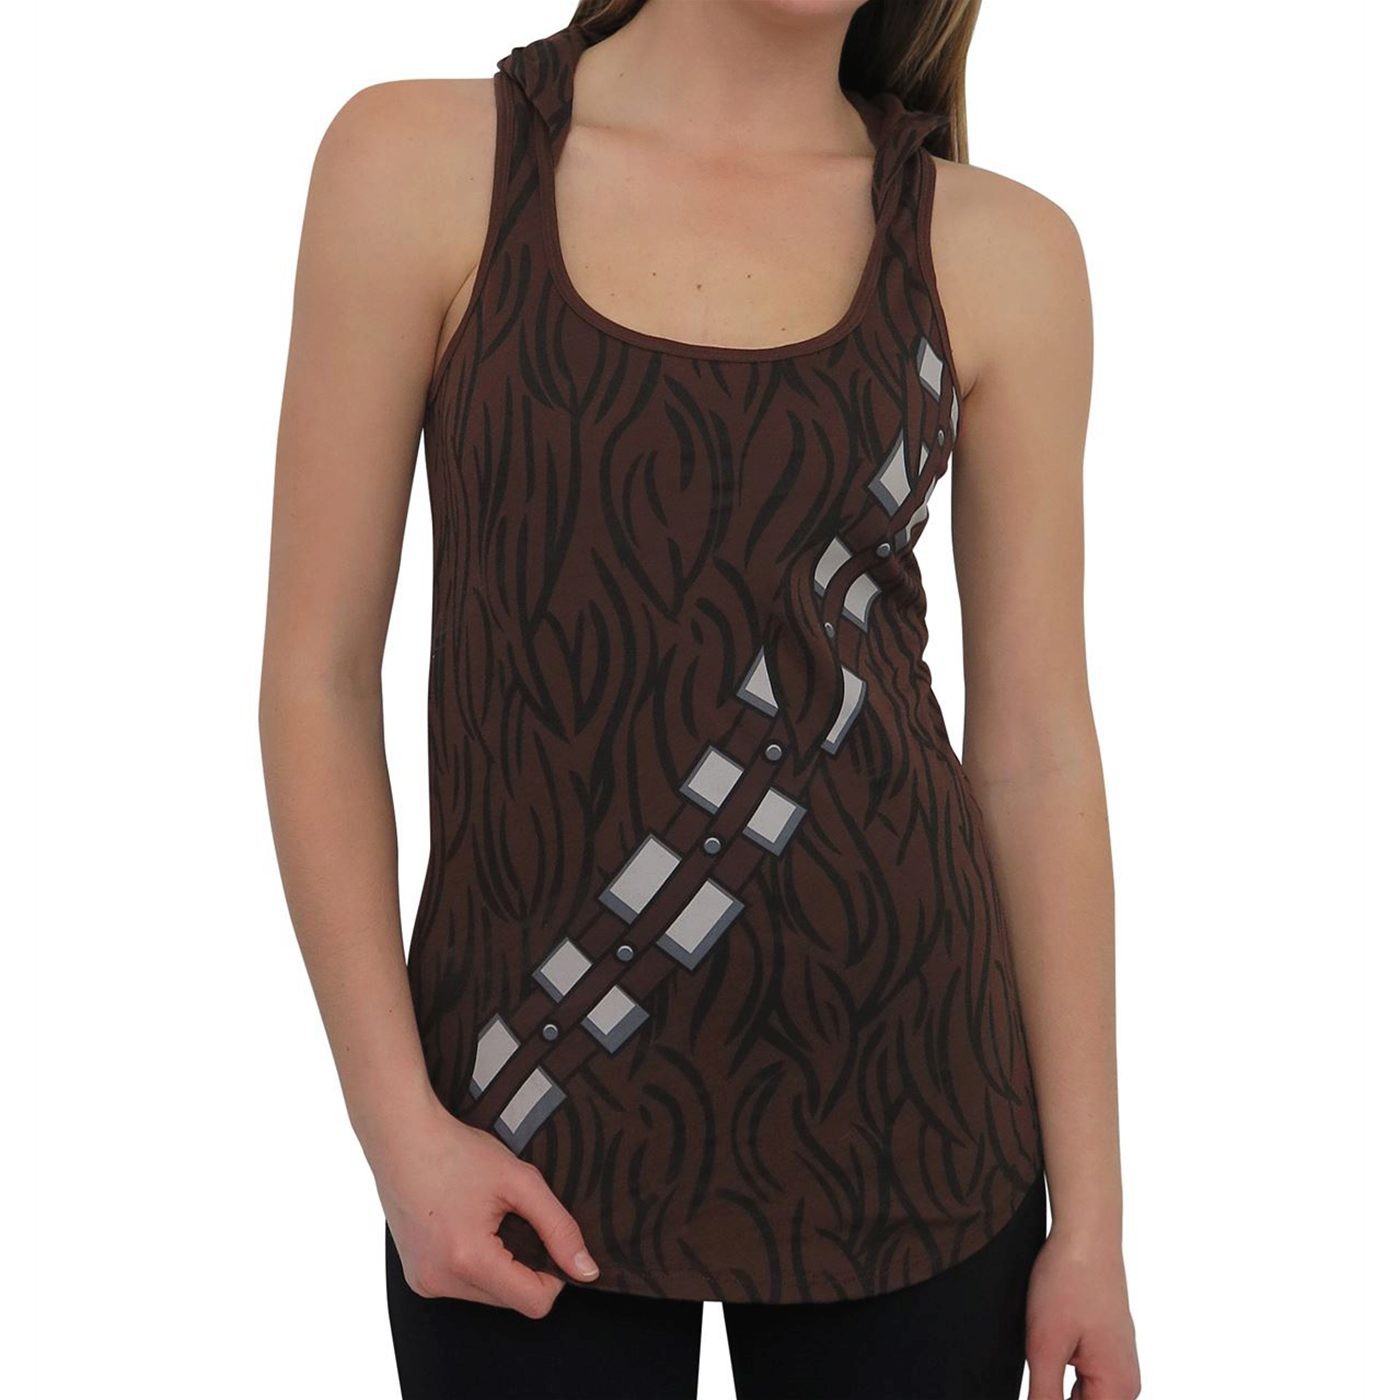 Star Wars Chewbacca Women's Hooded Tank Top